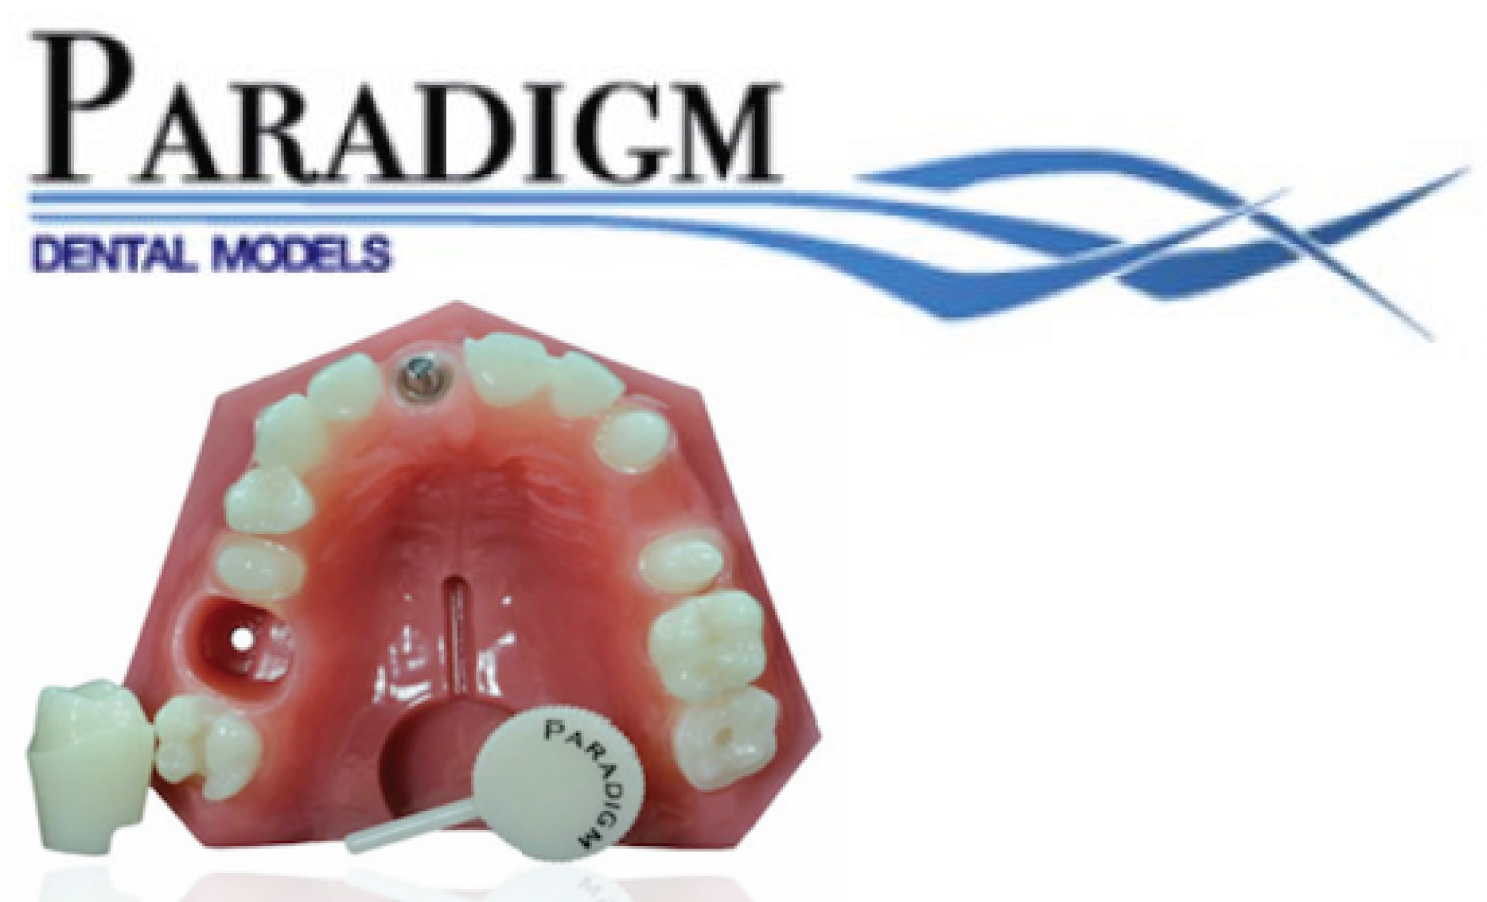 Paradigm Dental Models